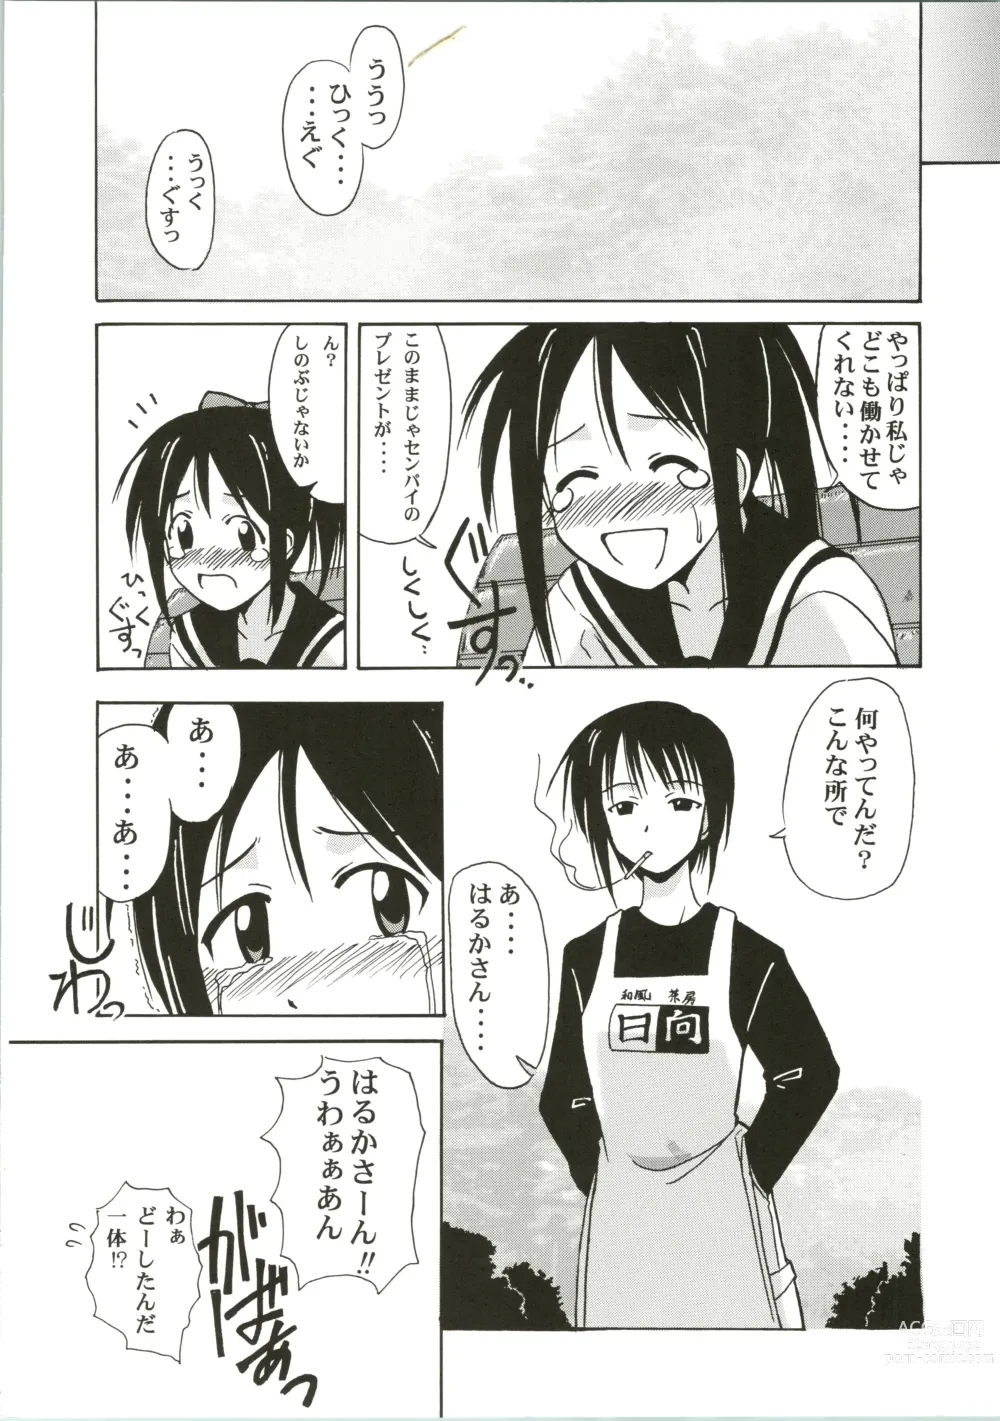 Page 6 of doujinshi Shinobu SP.